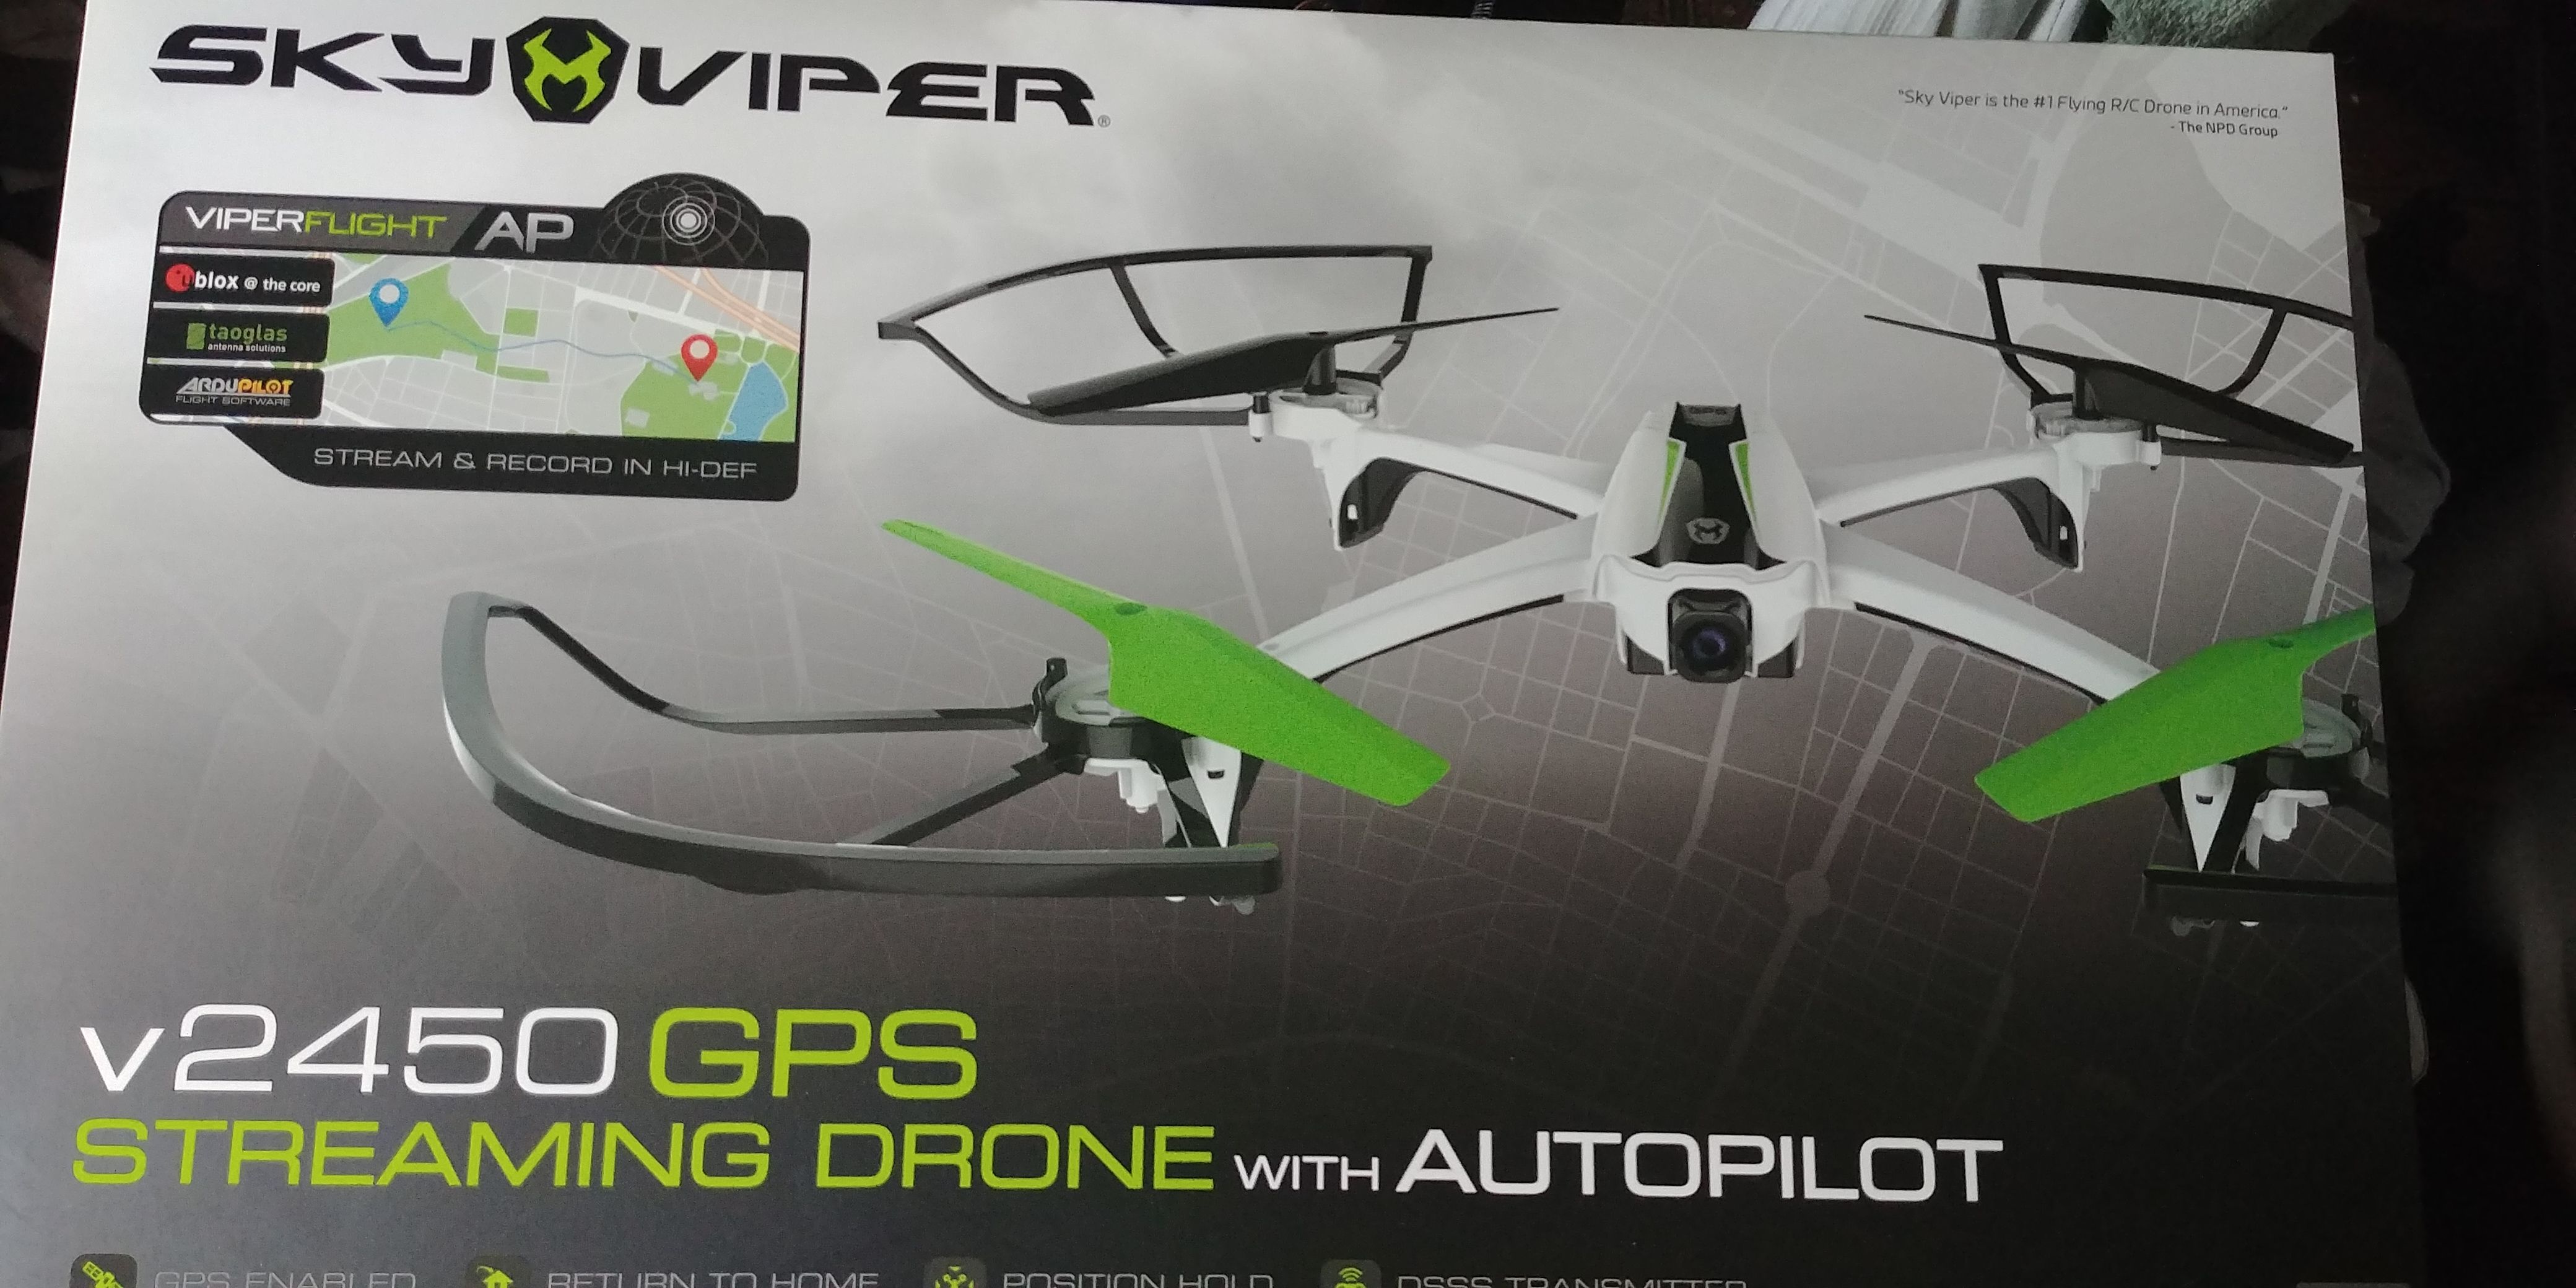 Skyviper Streaming Drone